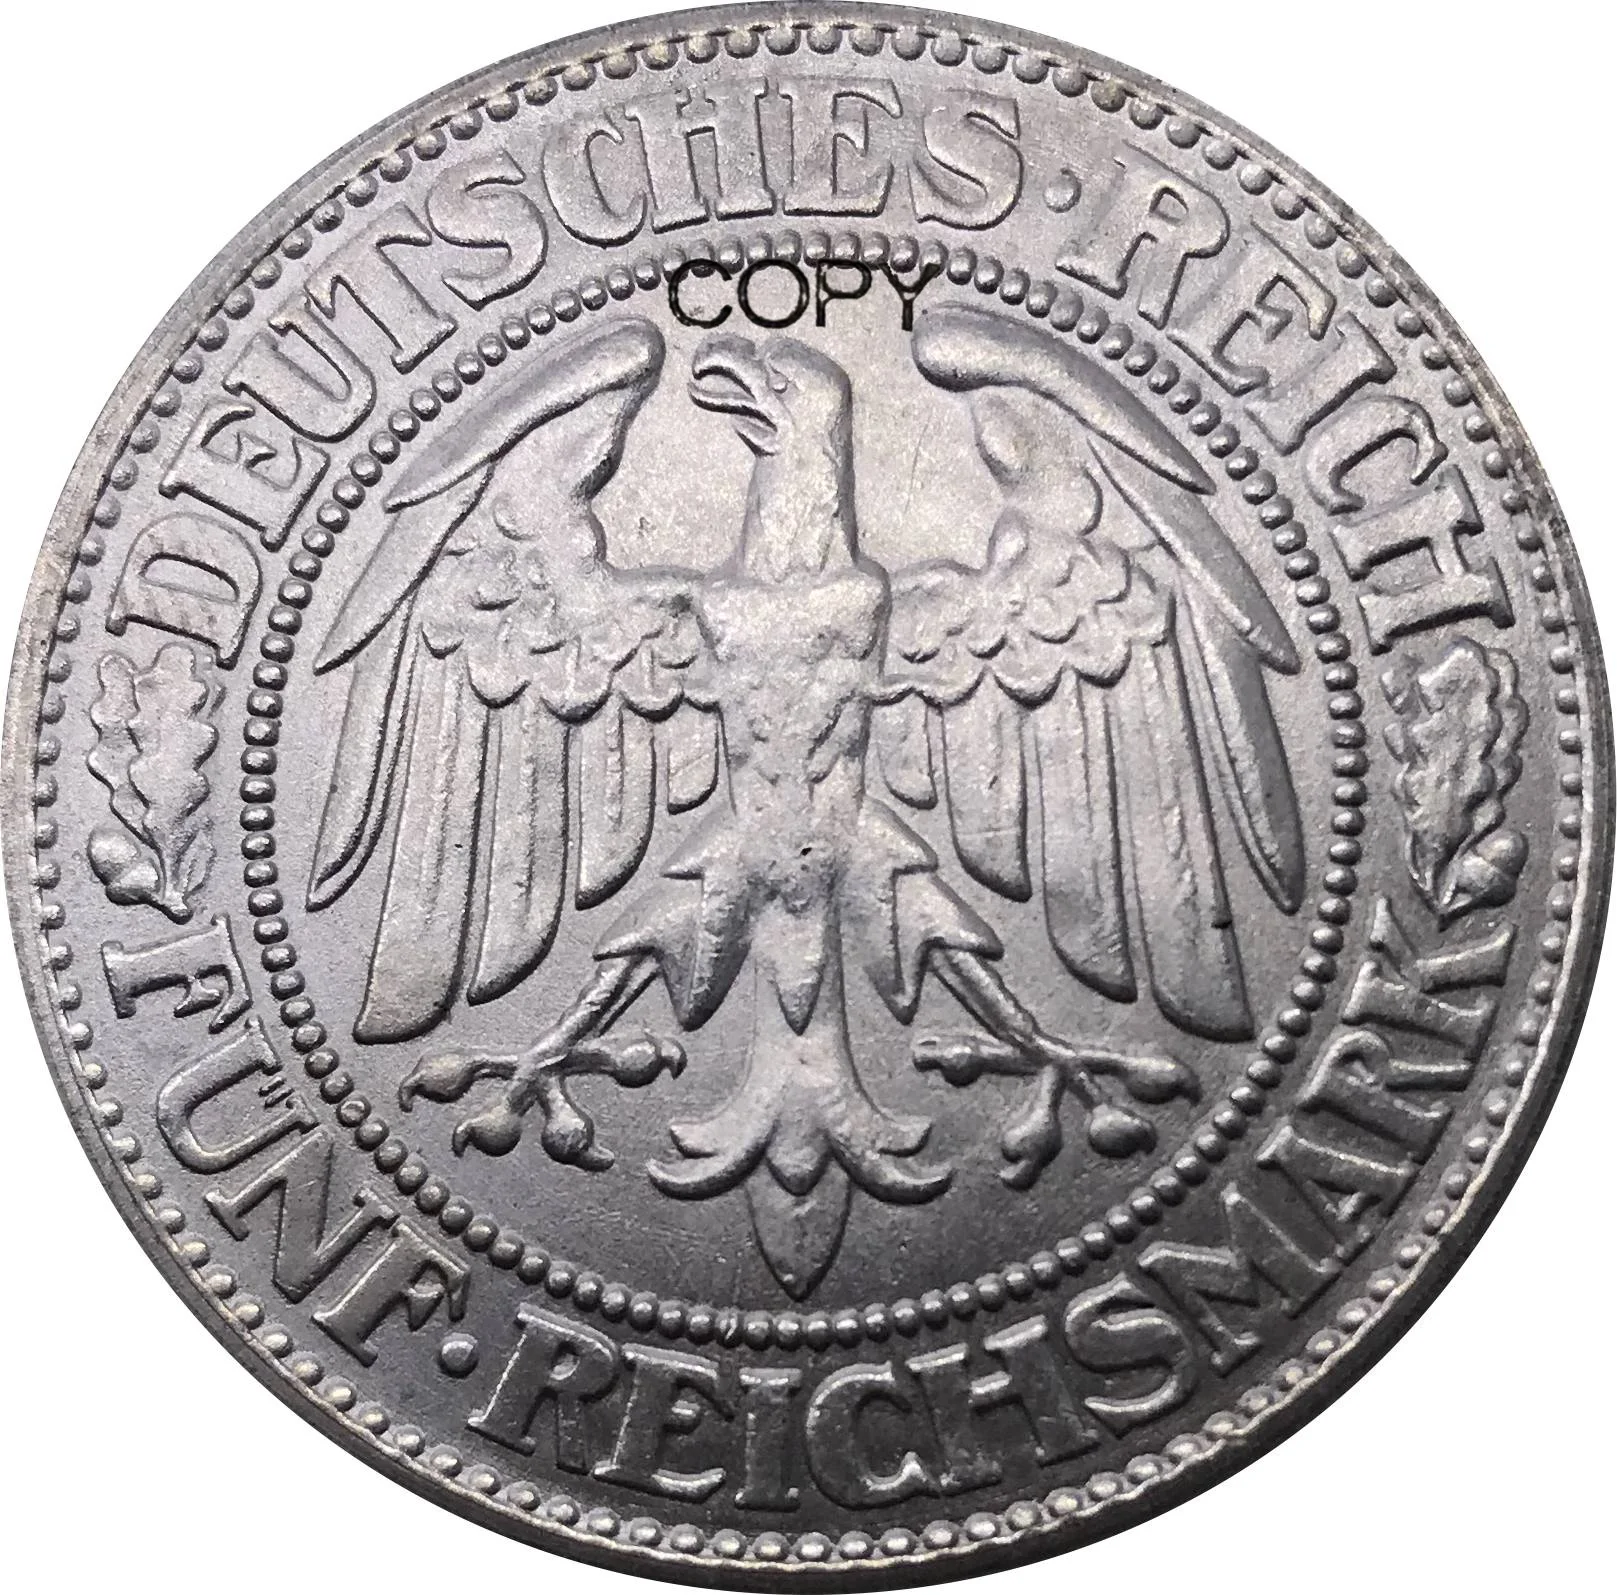 Görüntü /pic/images_82866-6/Almanya-5-reichsmark-sikke-1932-e-cupronickel-kaplama.jpg